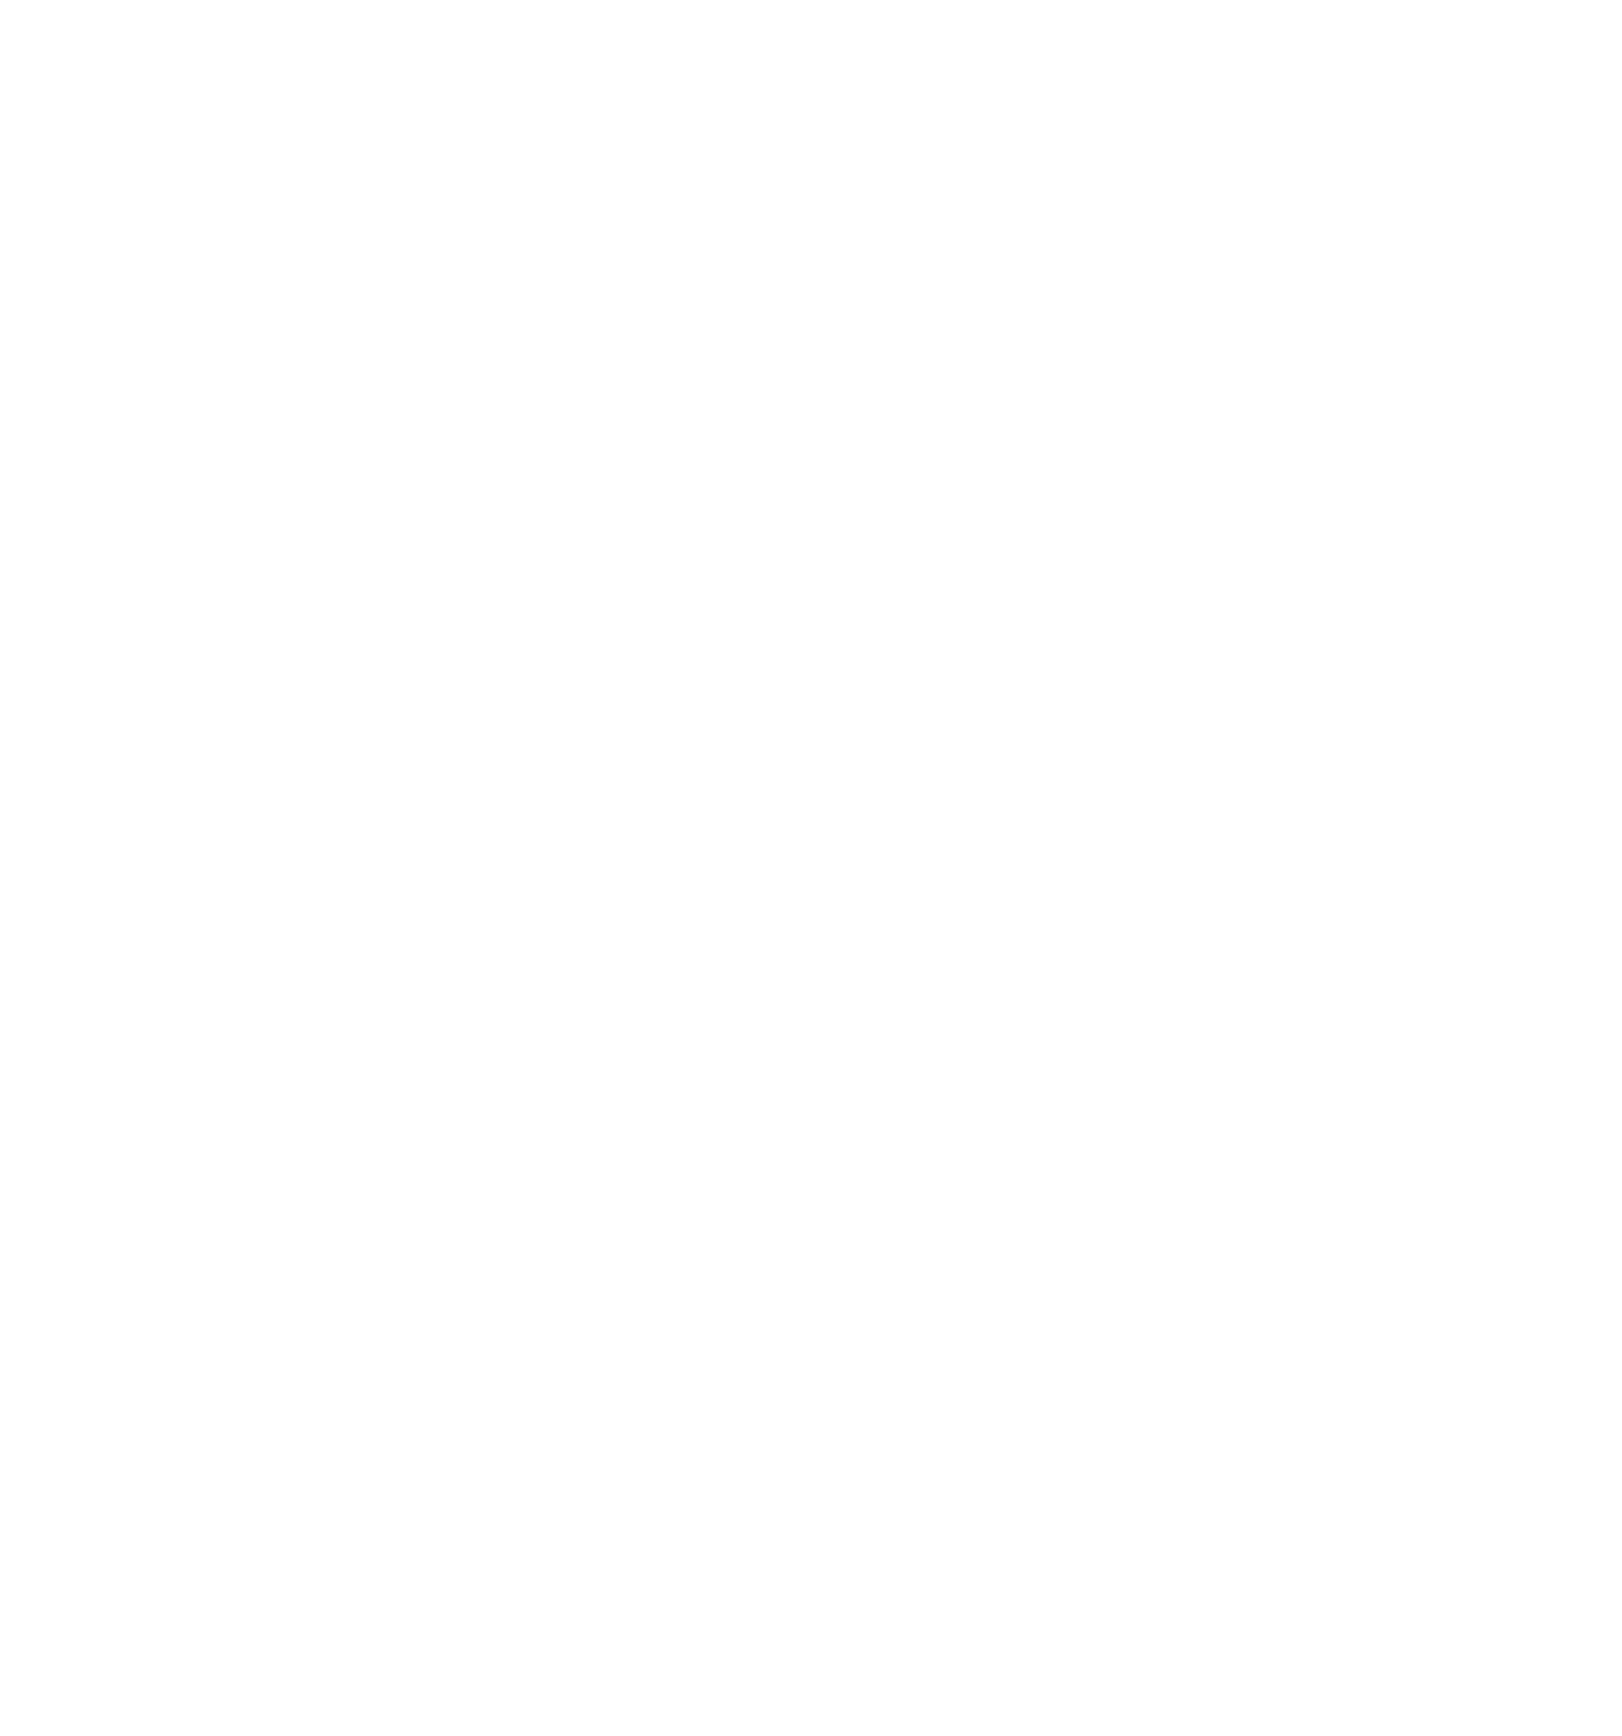 Our Vibrant Church